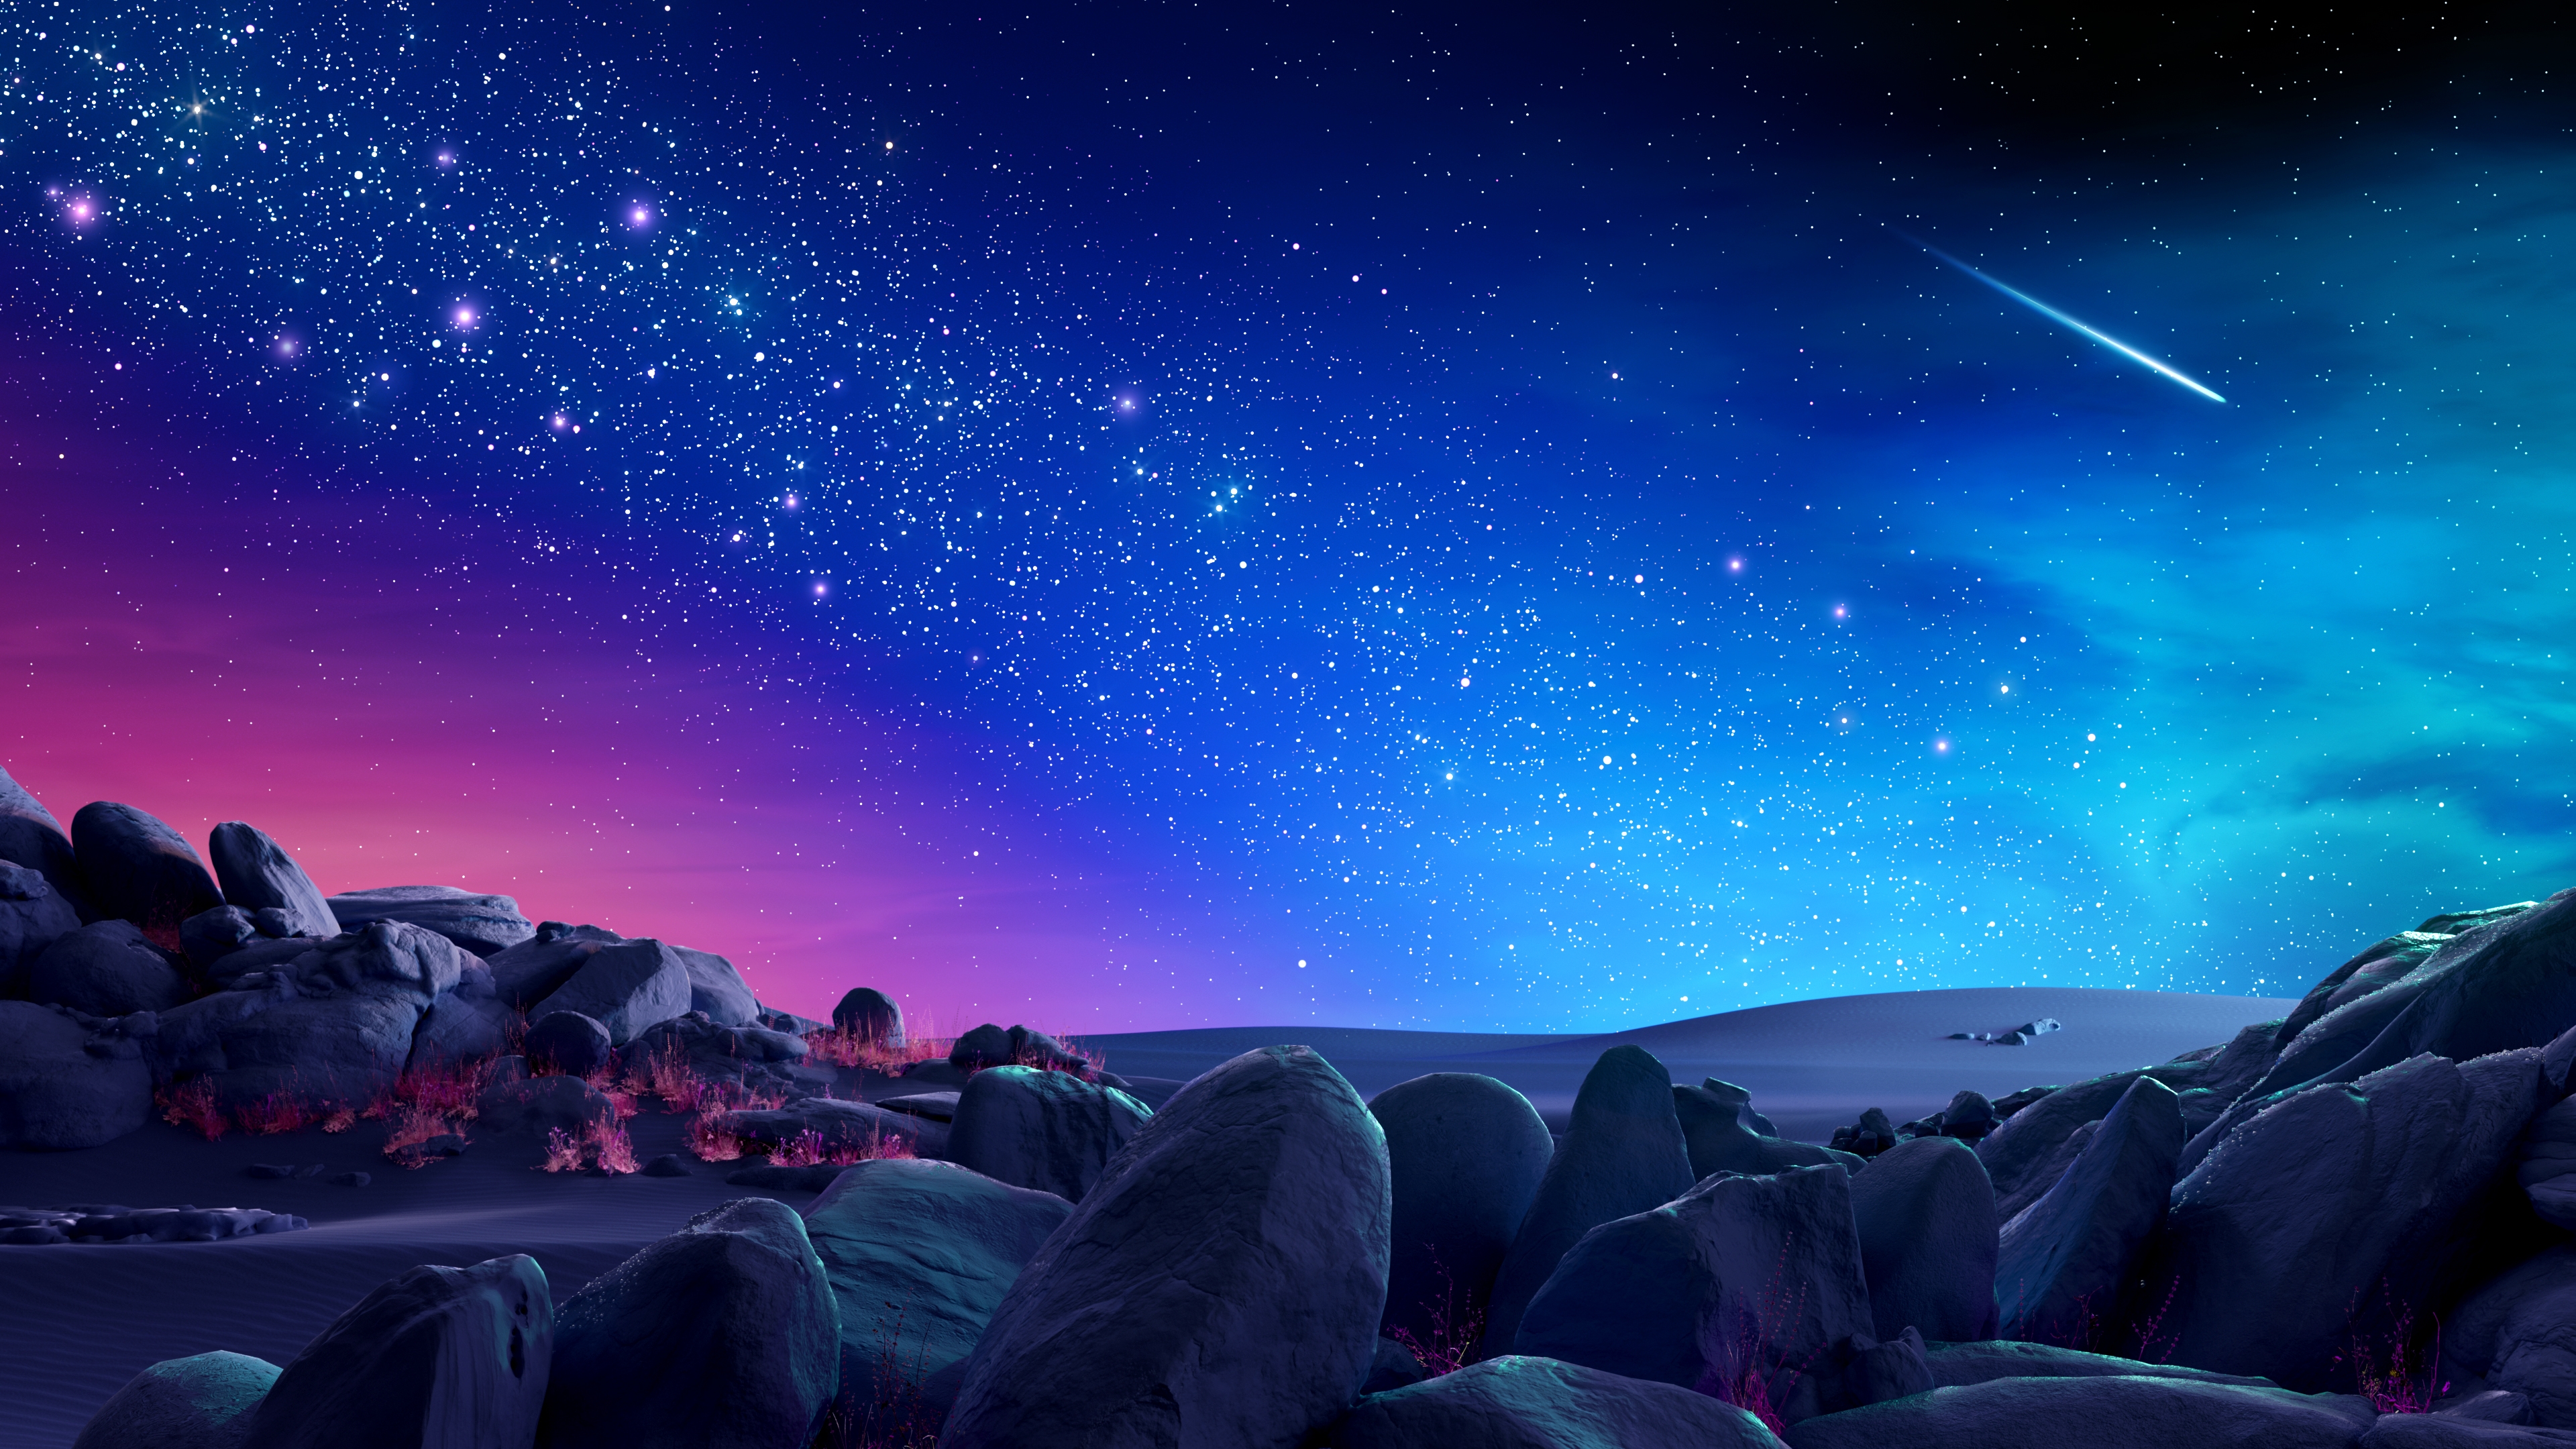 HD wallpaper, Surreal, Magic, Milky Way, Colorful, Desert, Rocks, Night Sky, Blue Aesthetic, Stars